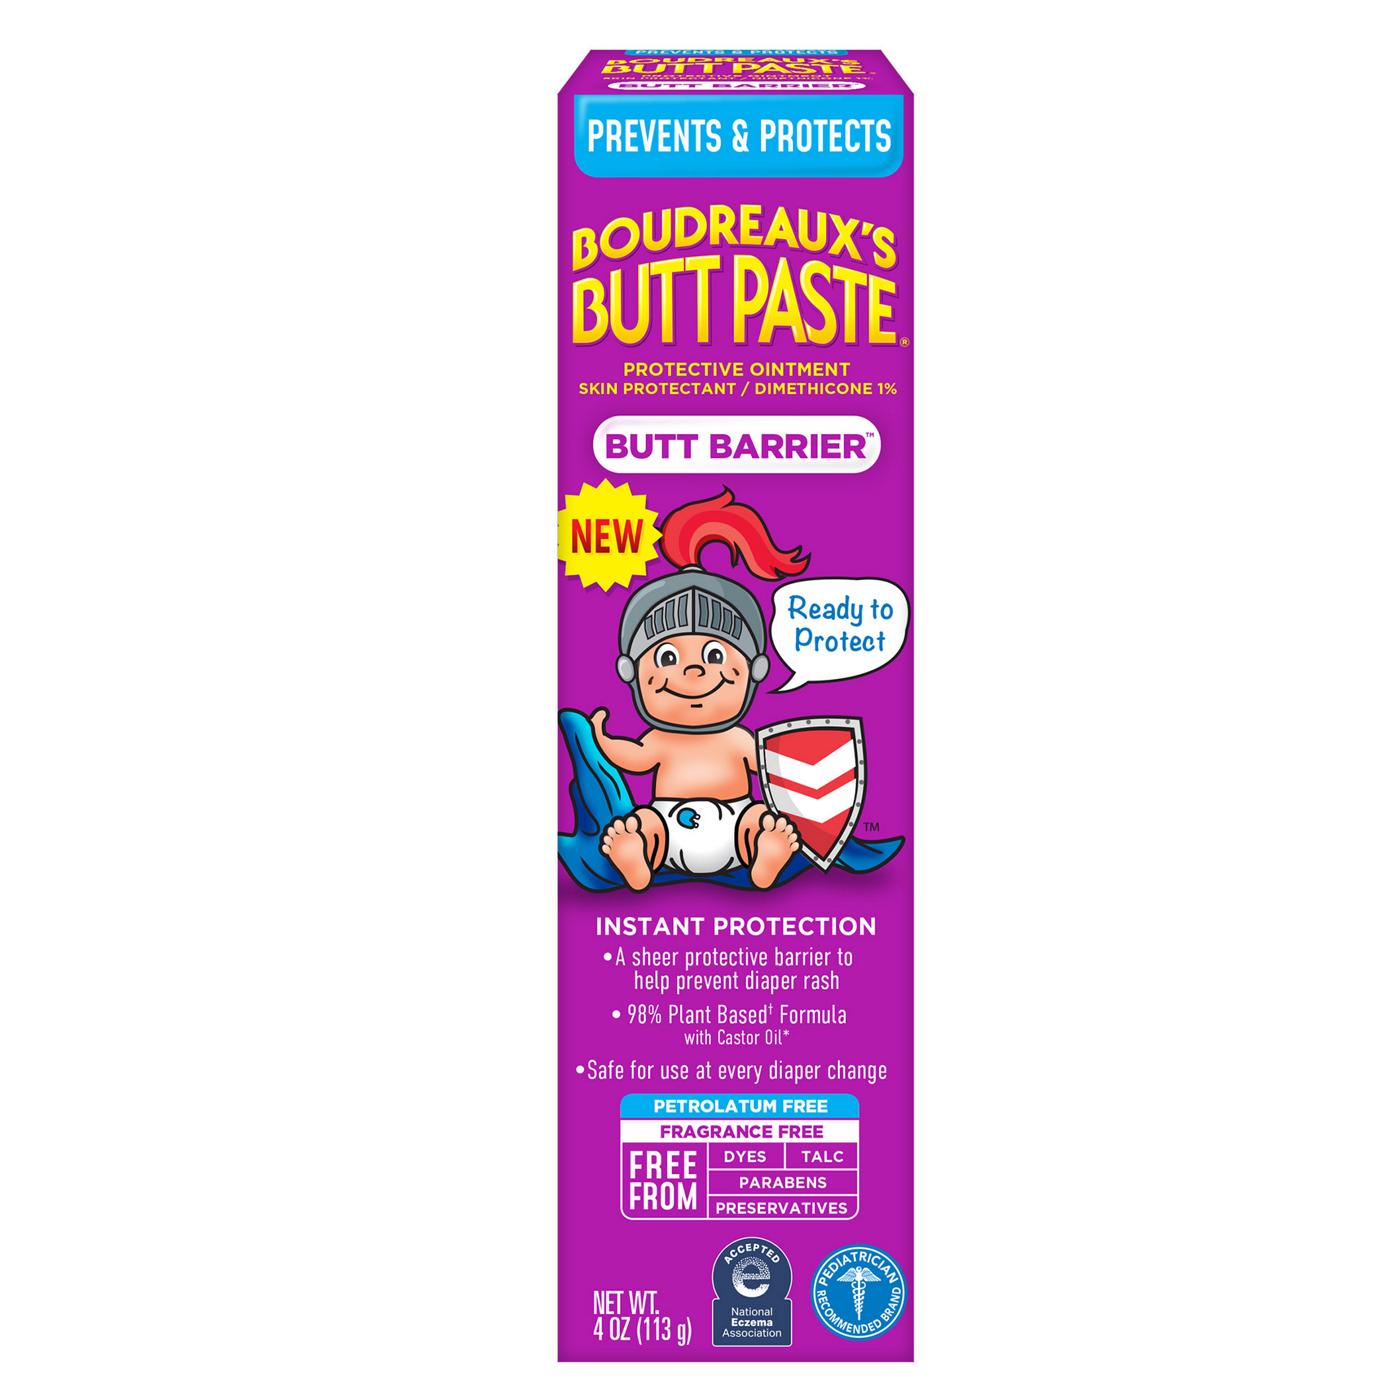 Boudreaux's Butt Paste Butt Barrier Diaper Rash Cream Ointment; image 1 of 5